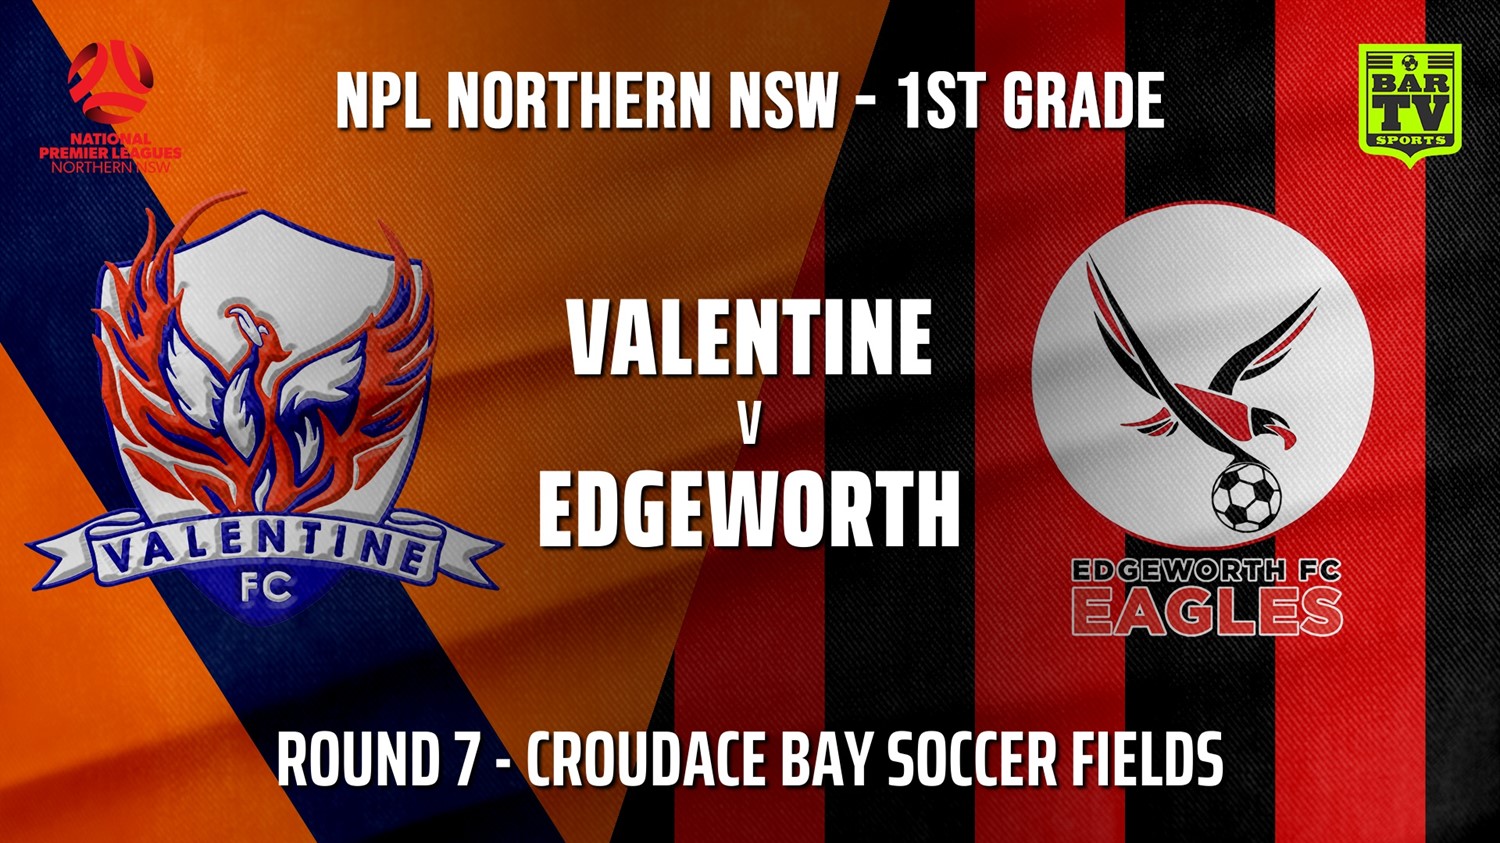 210516-NPL - NNSW Round 7 - Valentine Phoenix FC v Edgeworth Eagles FC Minigame Slate Image